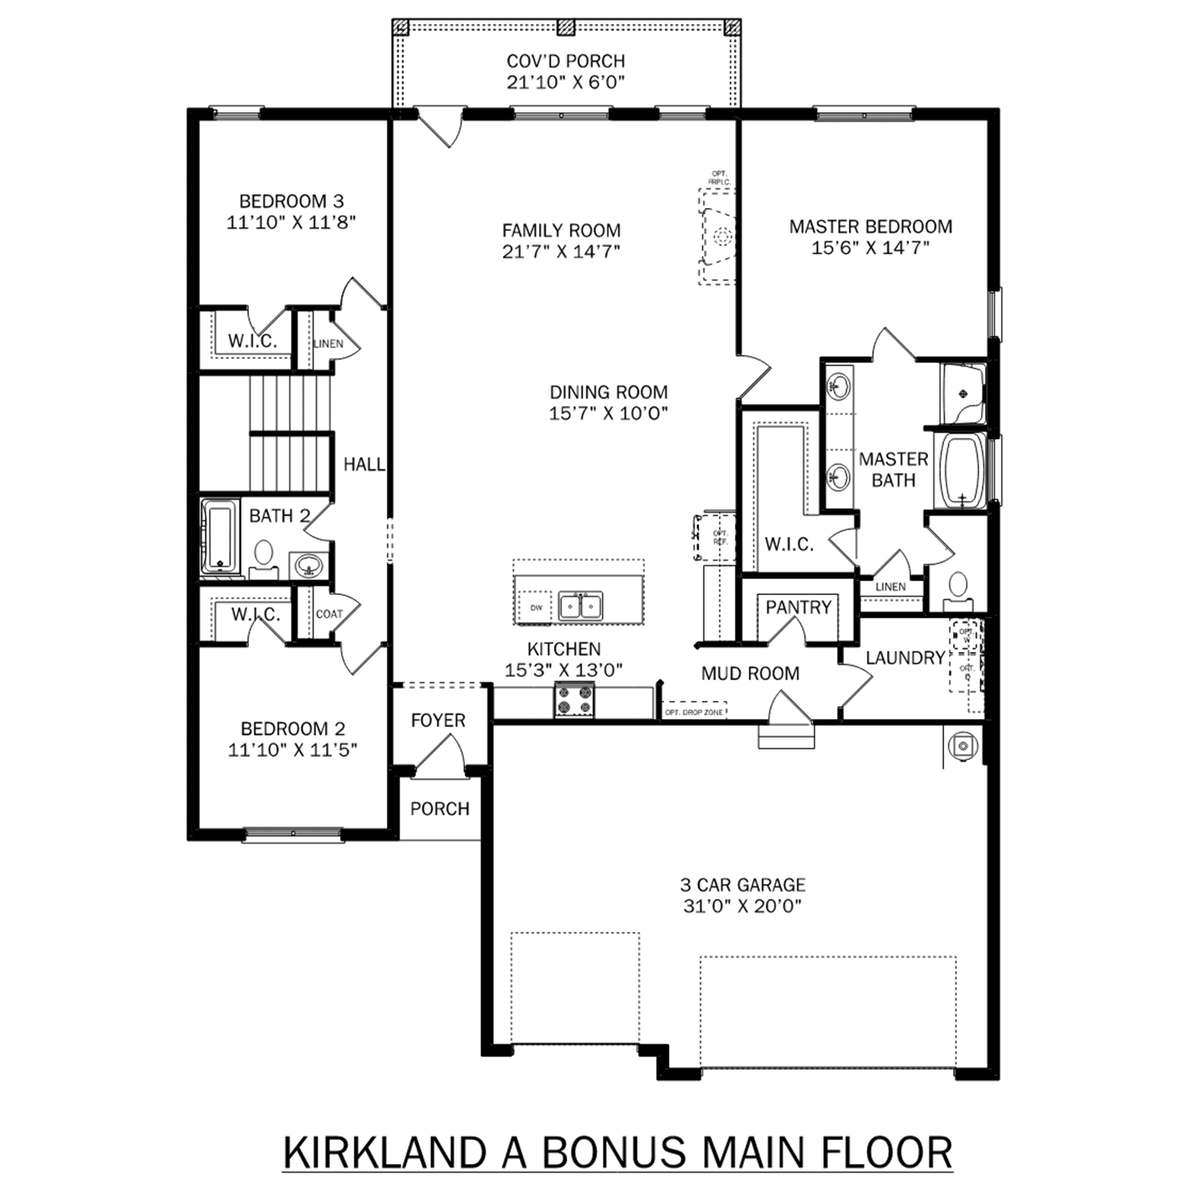 1 - The Kirkland with Bonus buildable floor plan layout in Davidson Homes' Creekside community.